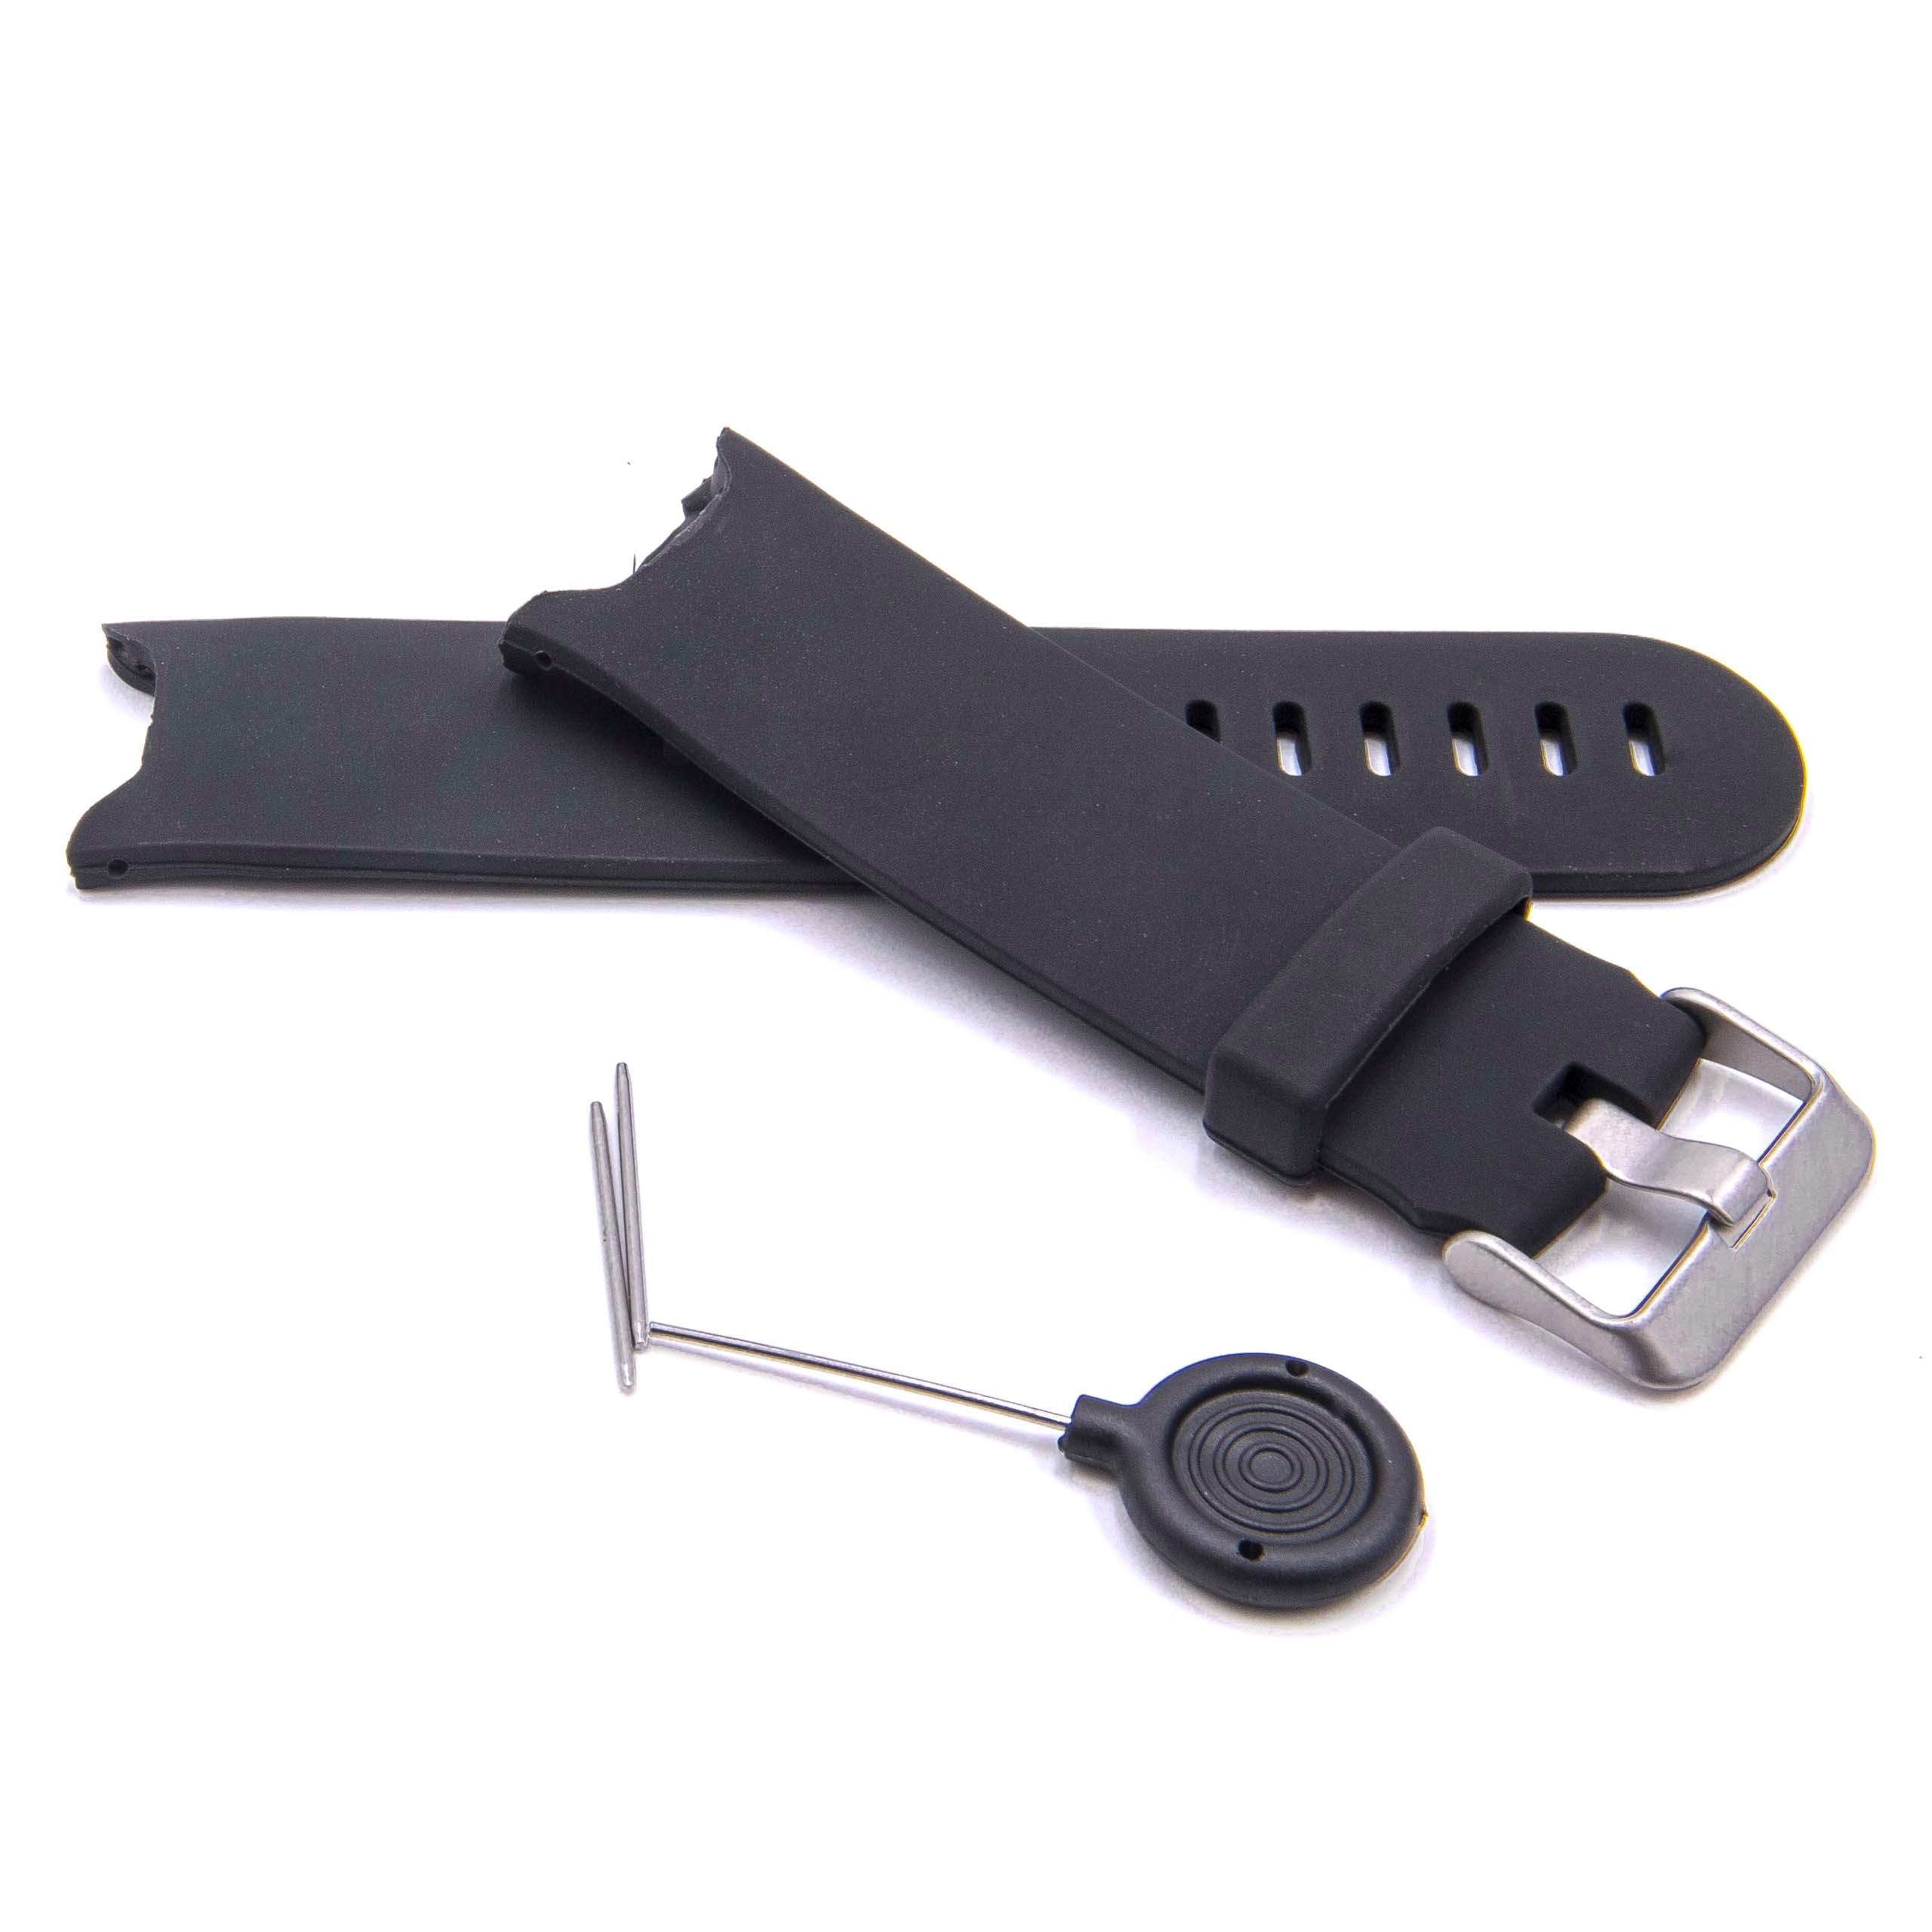 wristband for Garmin Approach Smartwatch - 11.7cm + 9.2 cm long, 24mm wide, silicone, black